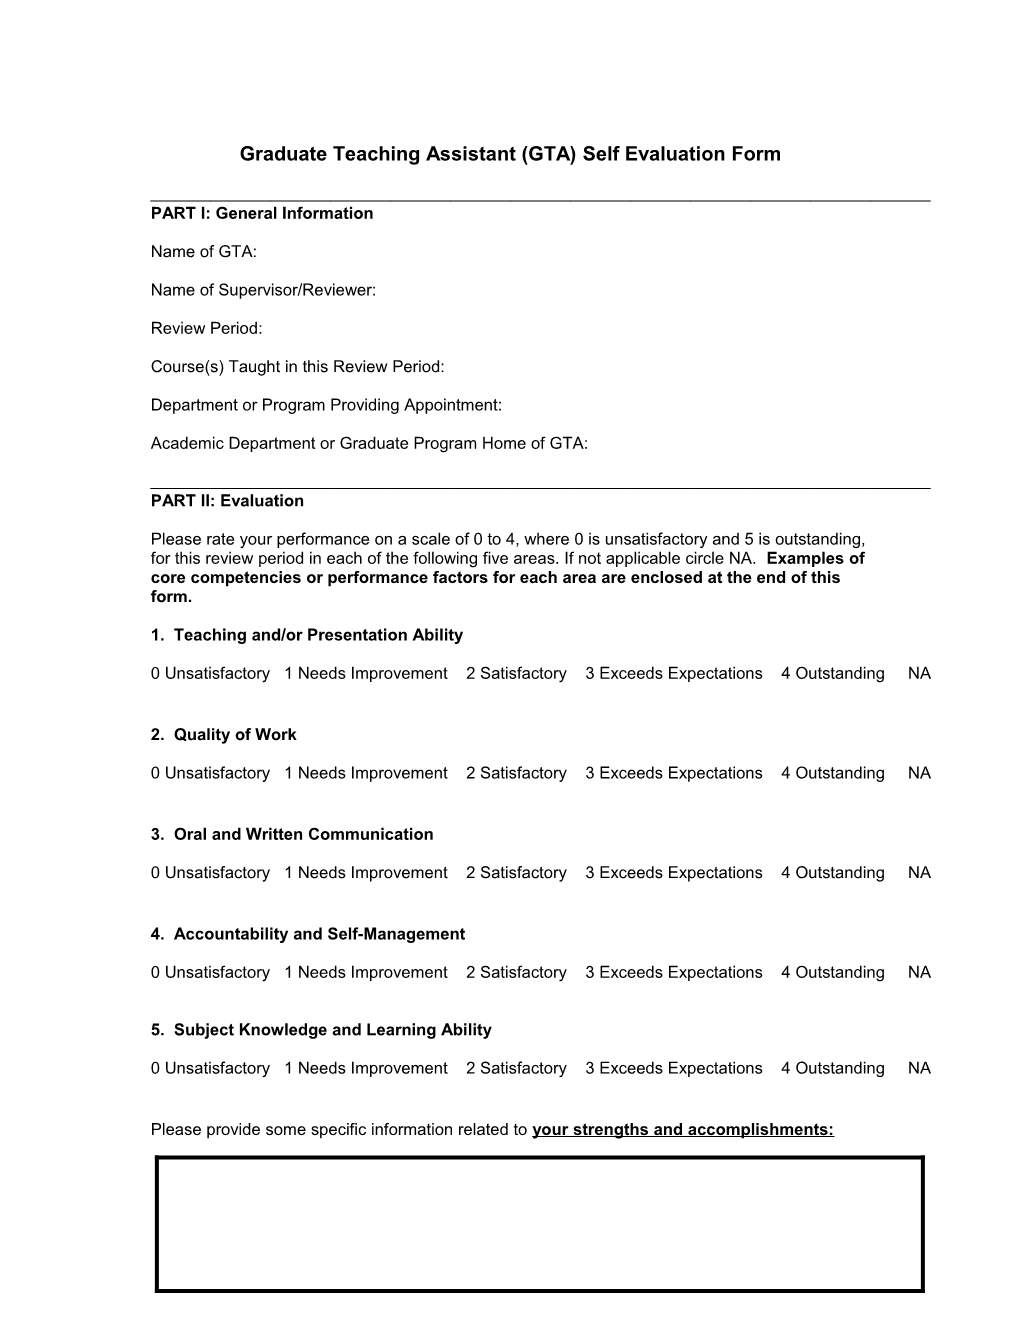 Graduate Teaching Assistant (GTA) Self Evaluation Form